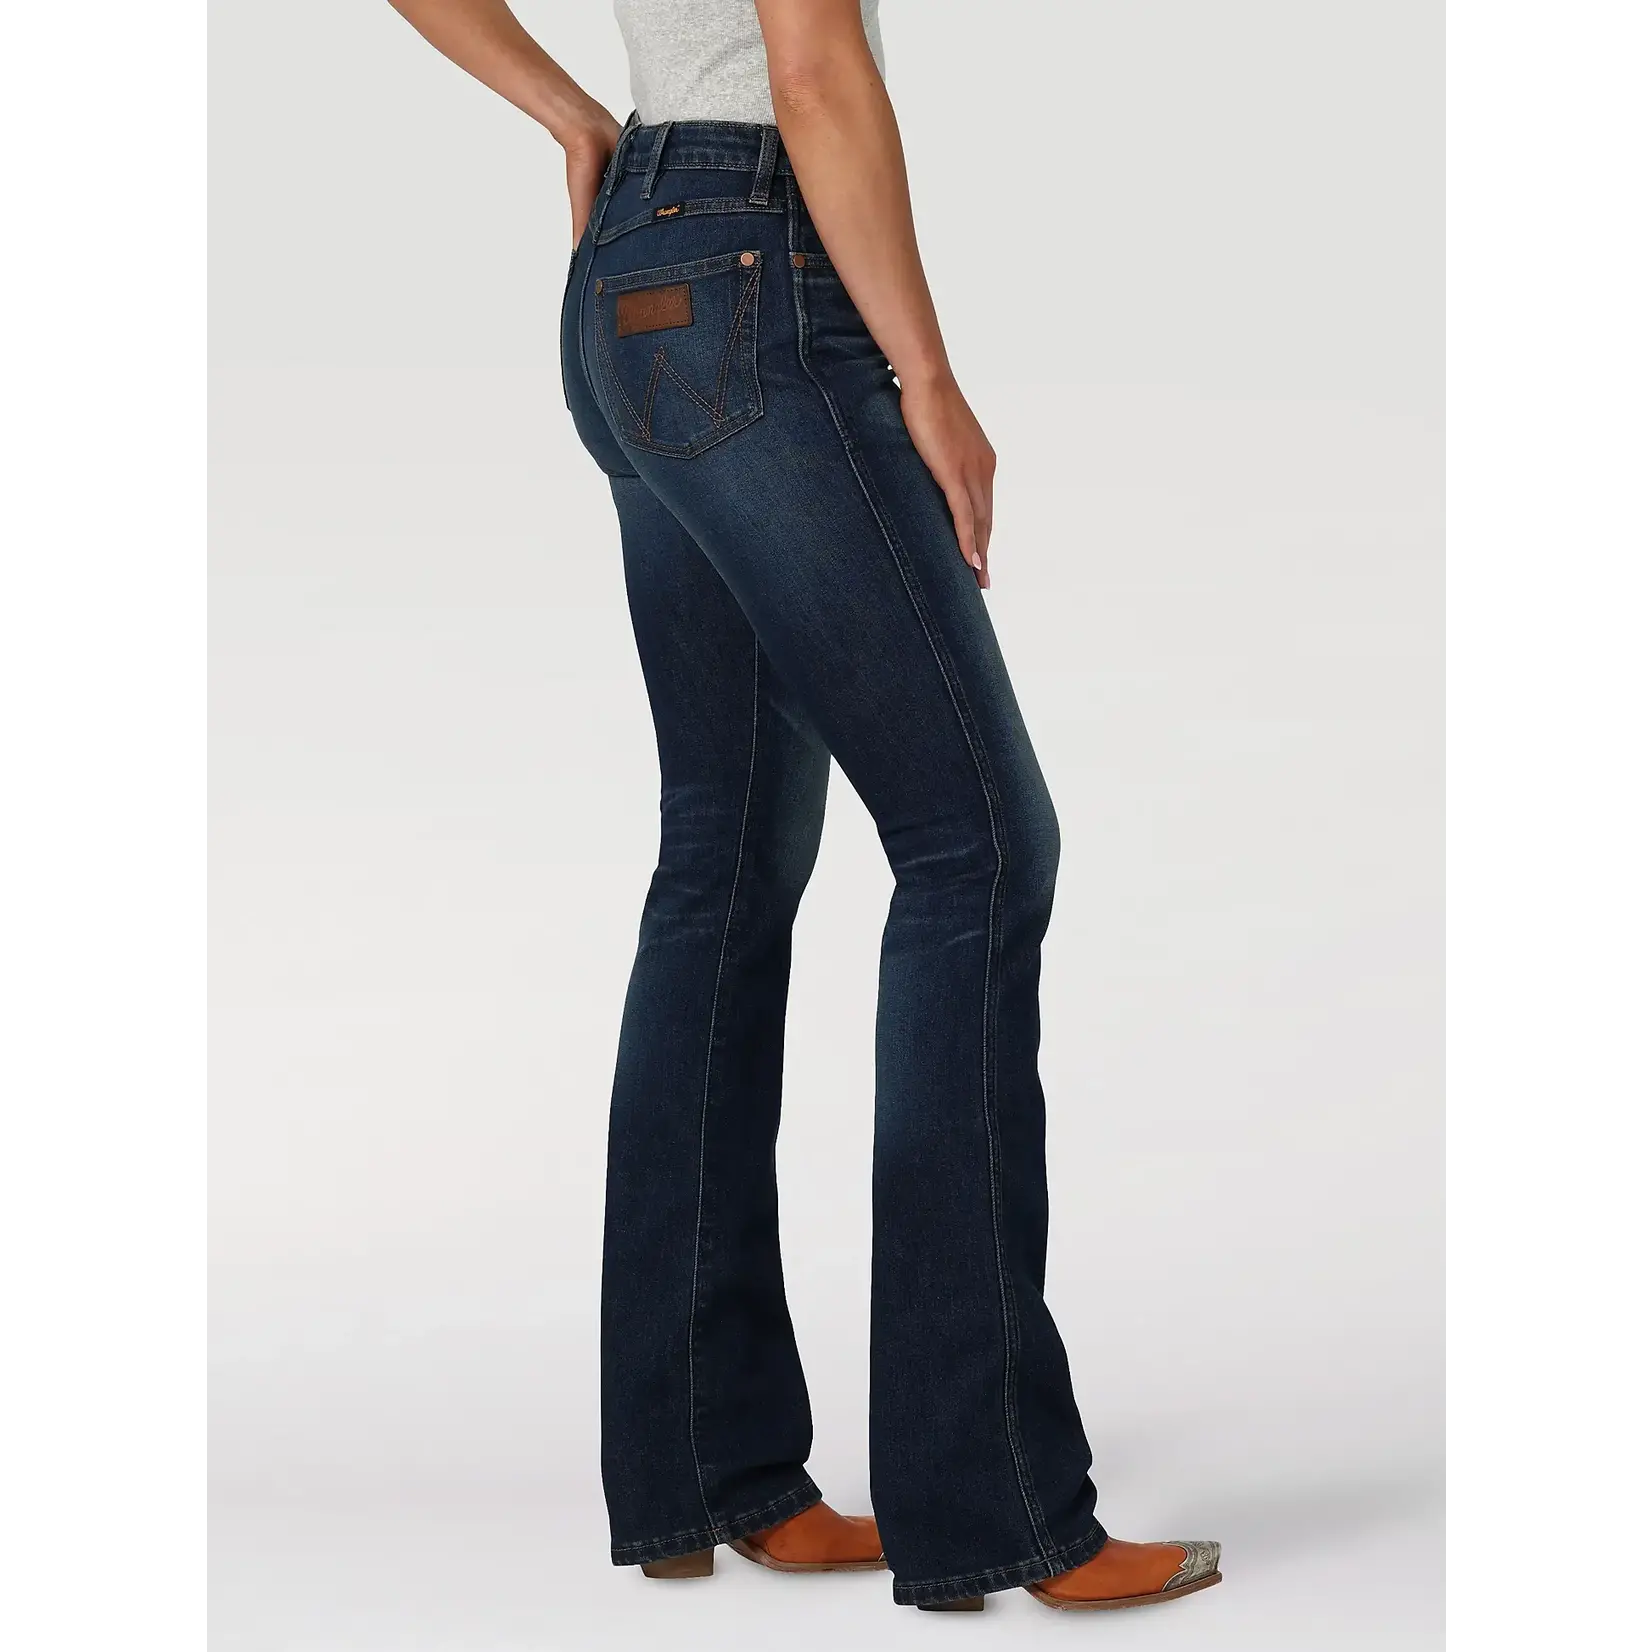 Wrangler Women's Retro Premium High Rise Slim Boot Jean - 112336707